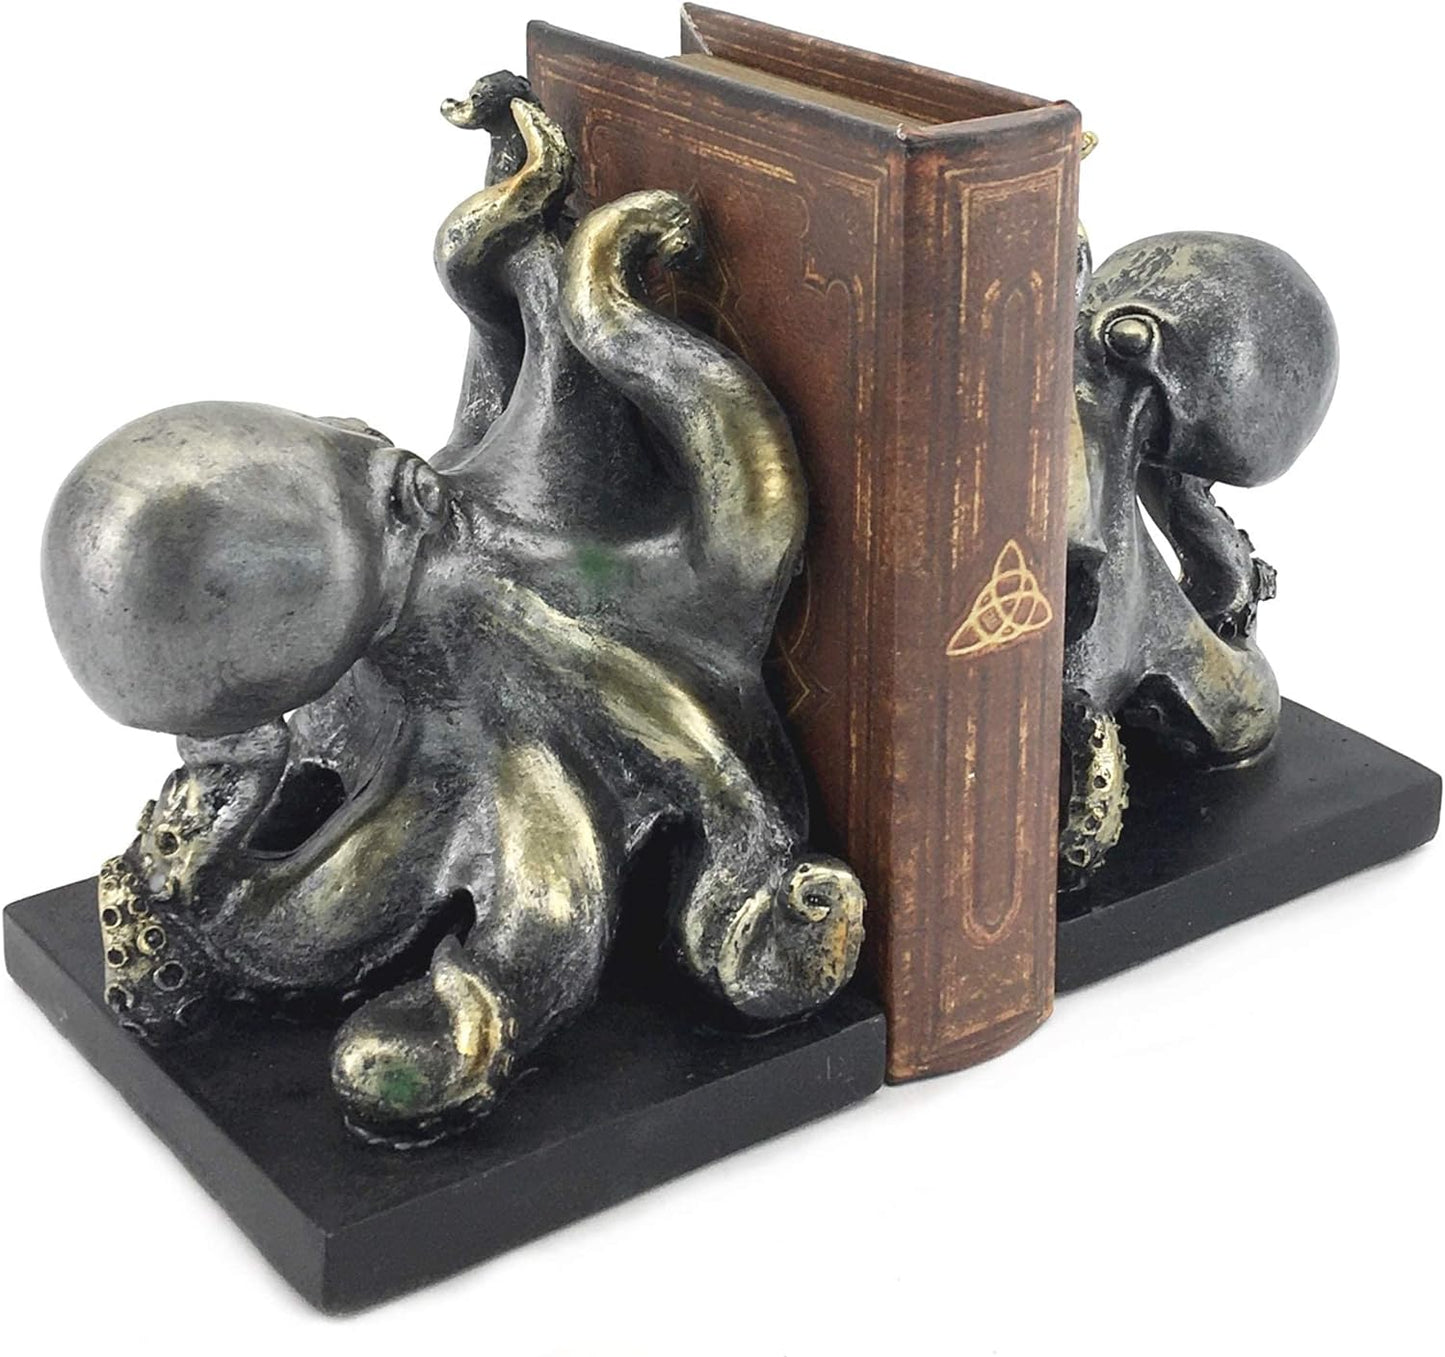 Decorative Bookends Octopus Pirate Sailors Nautical Home Decor Vintage Antique Cute Cool Book Ends Unique Accents Silver 6 Inch